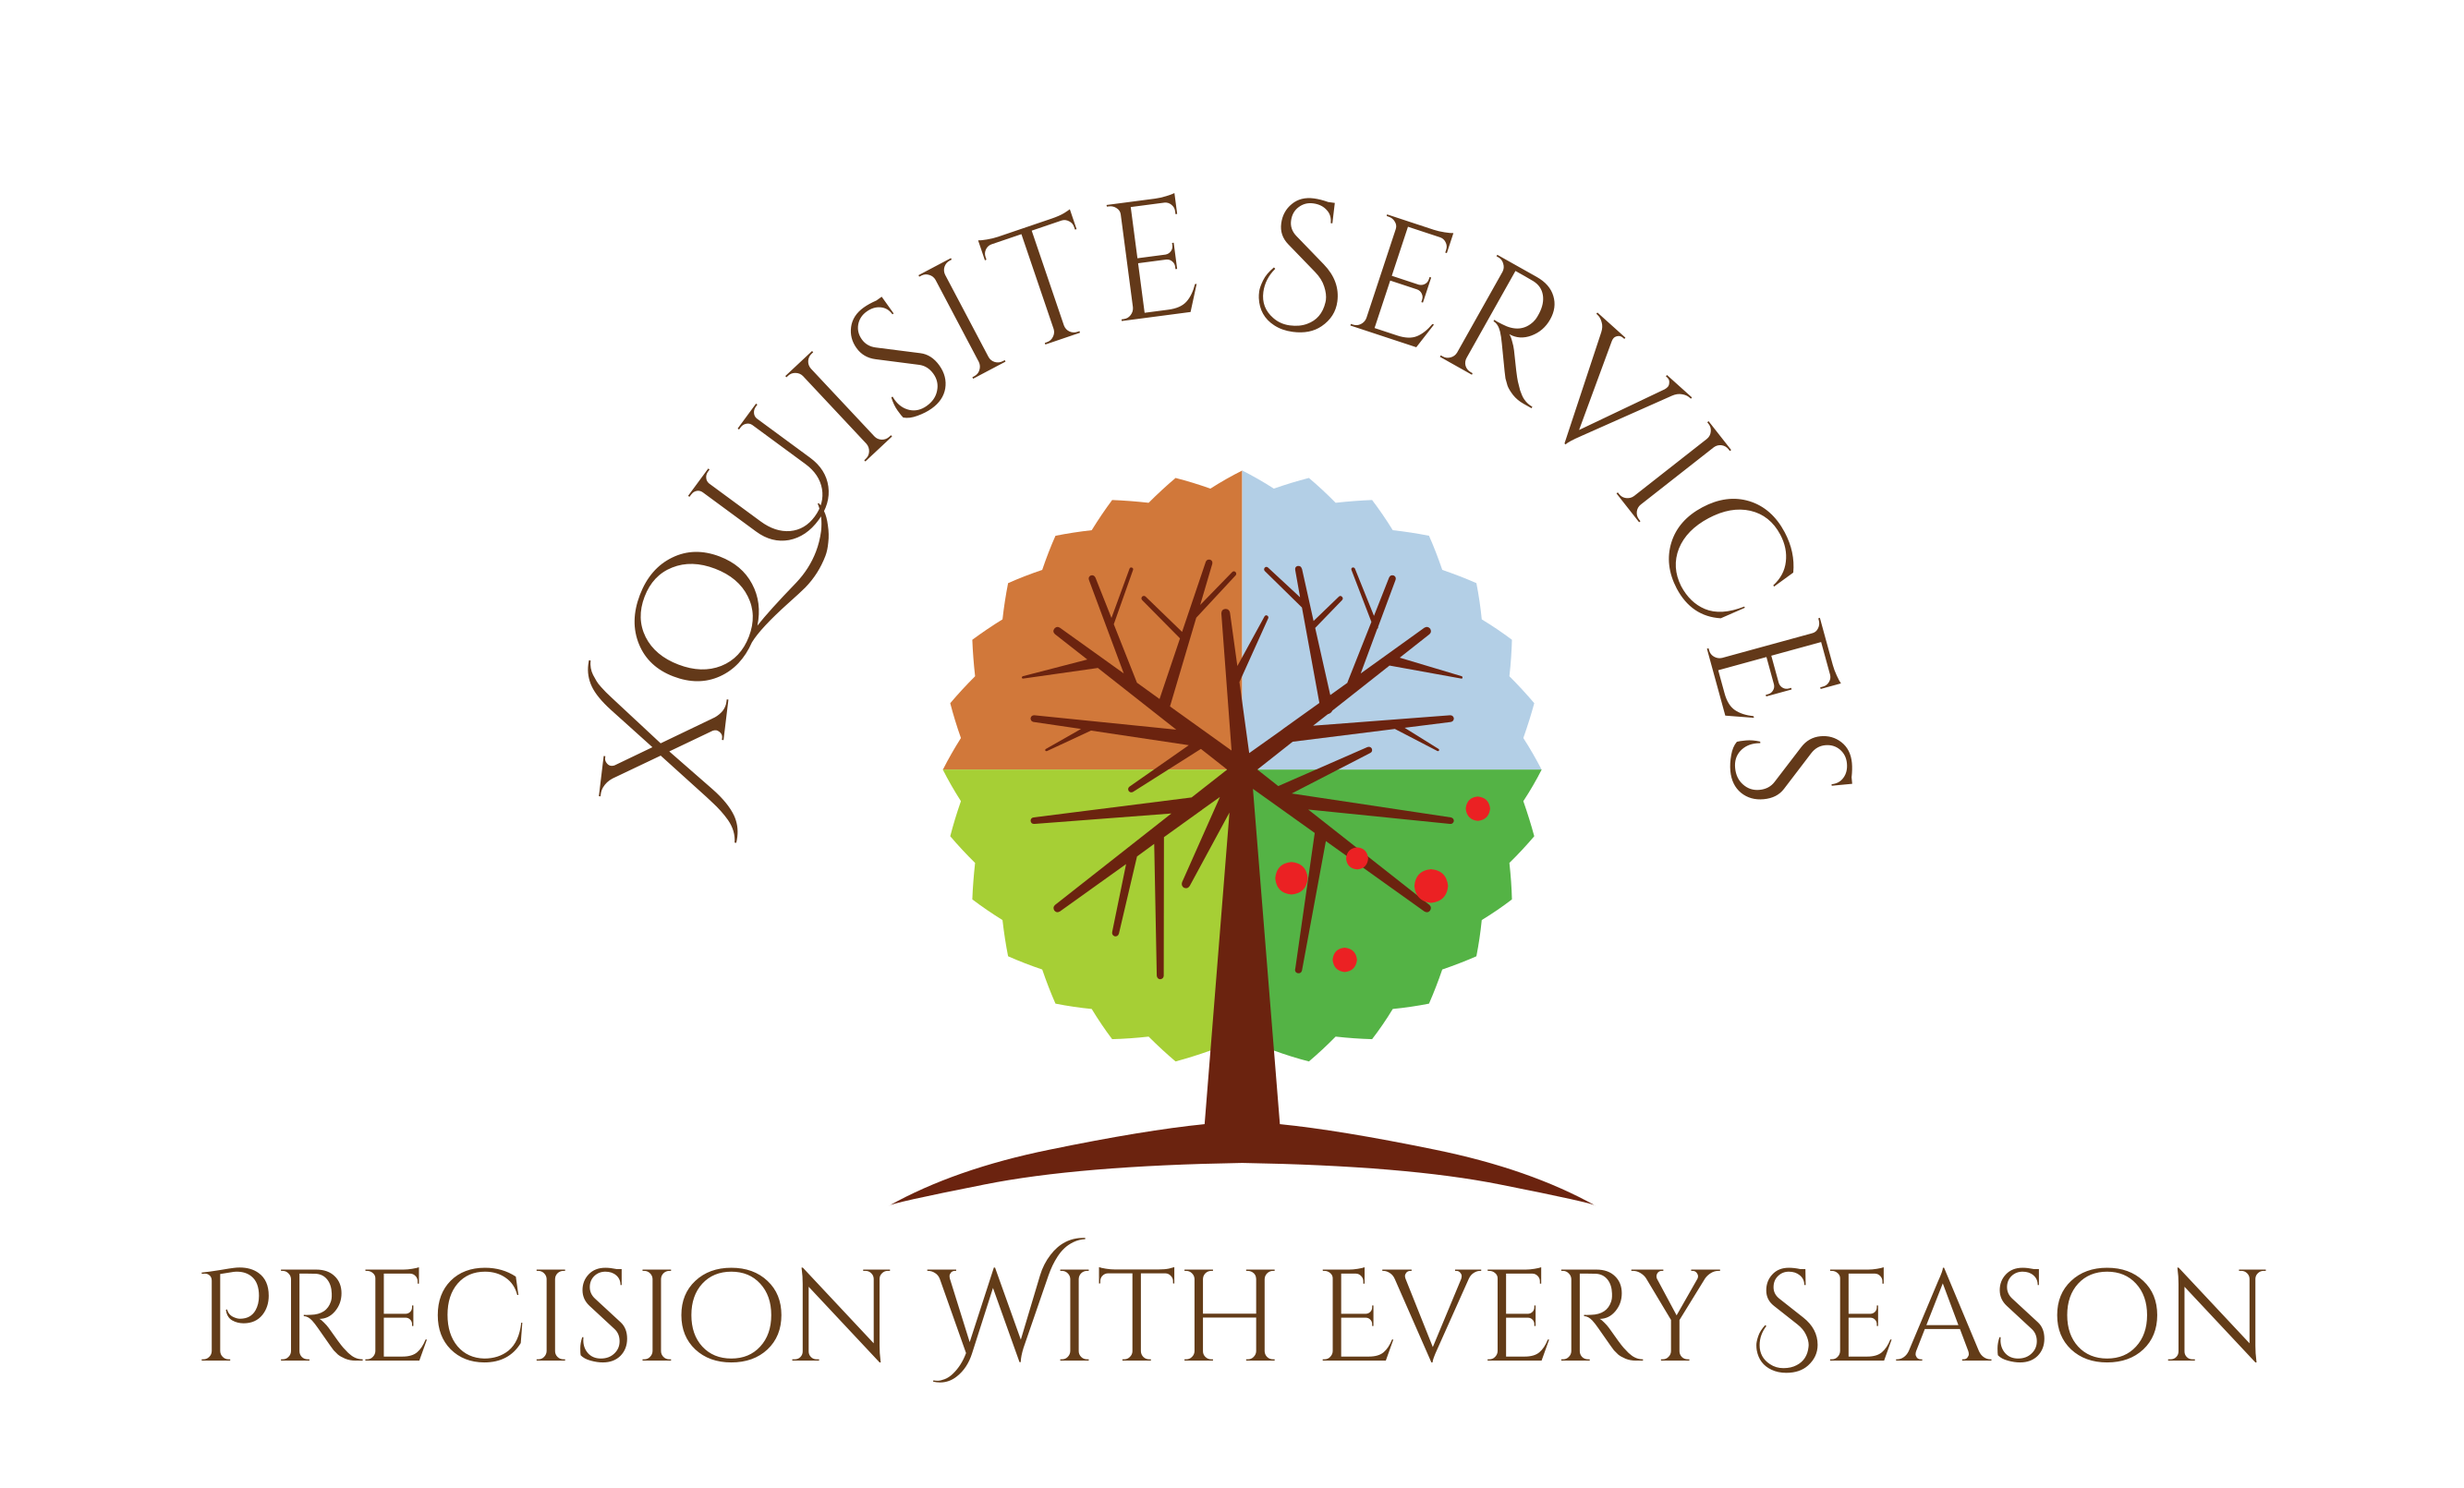 Xquisite Services LLC